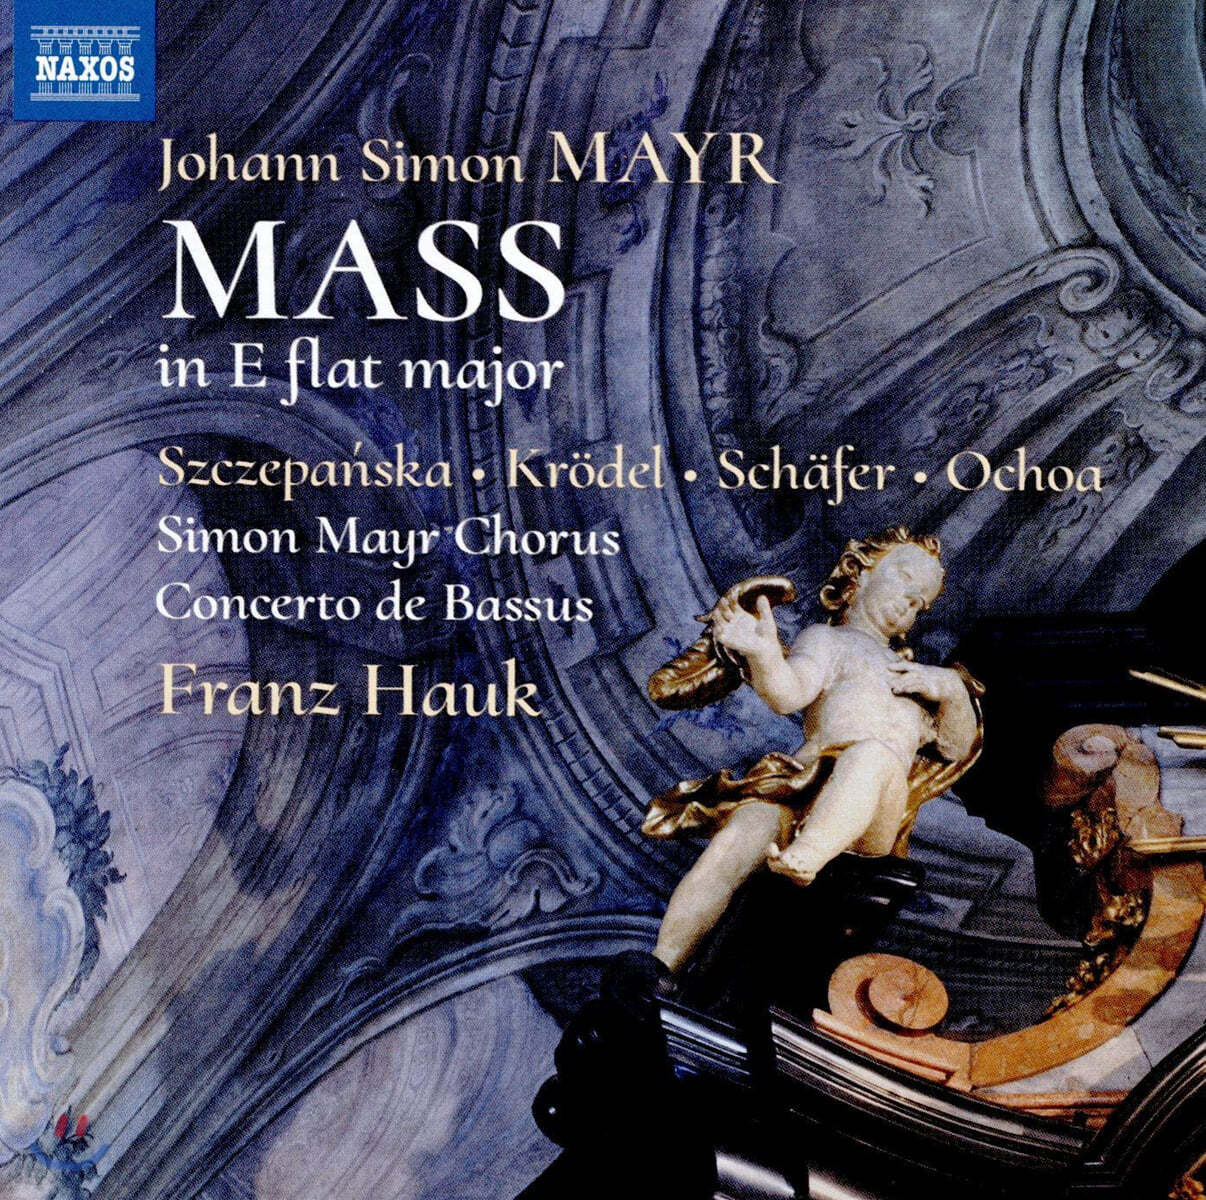 Franz Hauk 요한 지몬 마이어: 미사 내림마장조 (Johann Simon Mayr: Mass in E flat major)